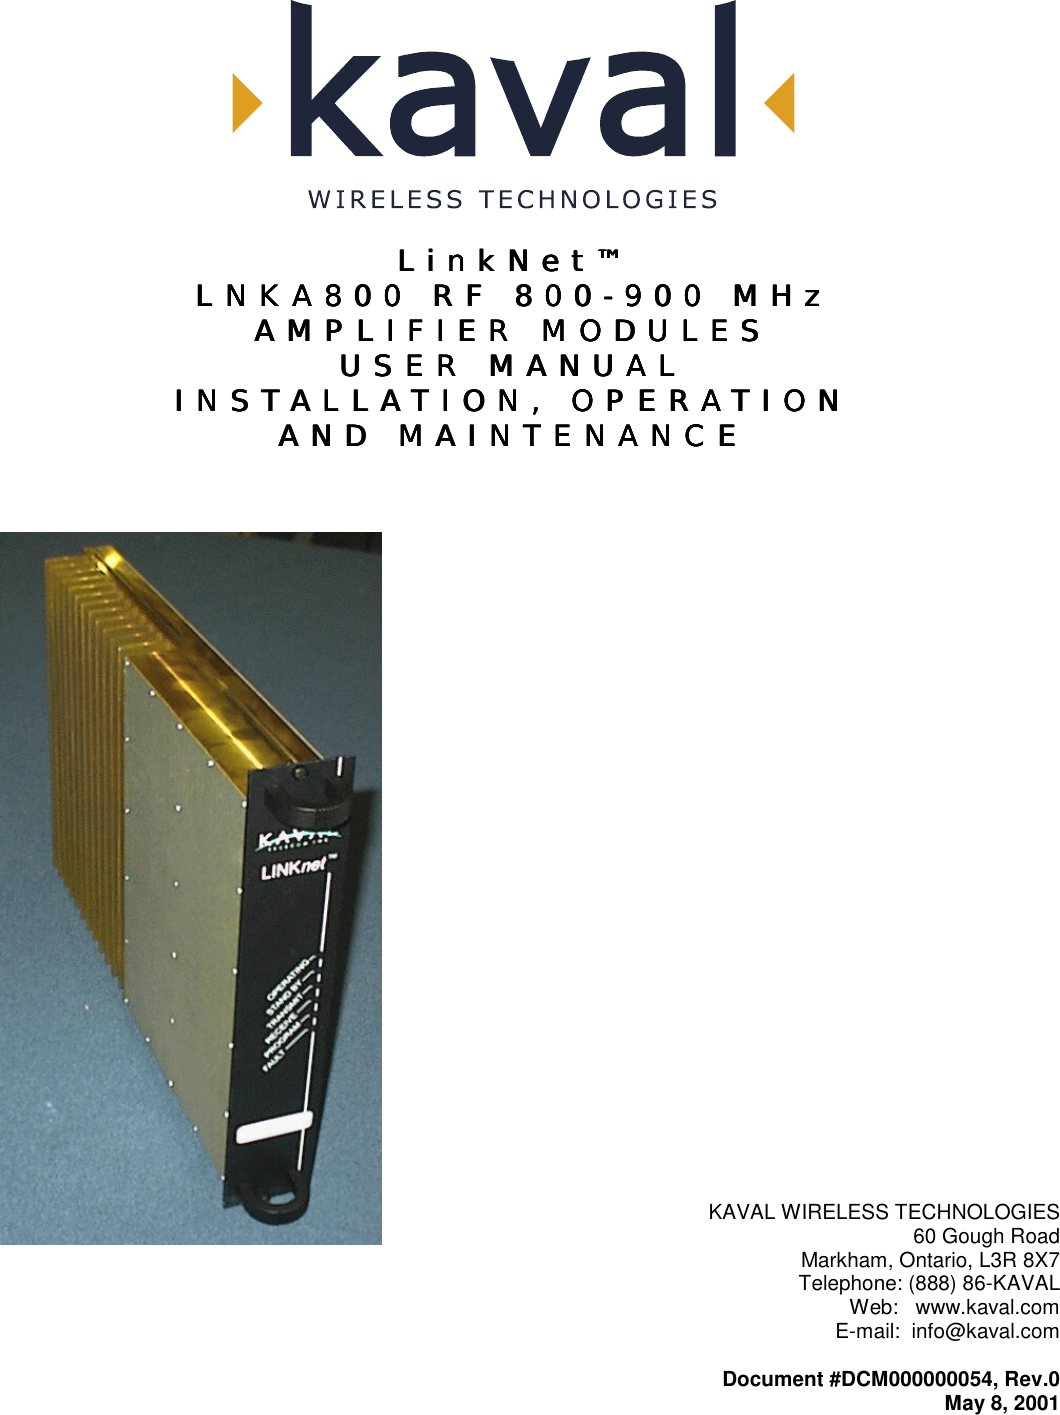   LinkNet™LinkNet™LinkNet™LinkNet™ LNKA800 RF 800LNKA800 RF 800LNKA800 RF 800LNKA800 RF 800----900 MHz900 MHz900 MHz900 MHz    AMPLIFIER MODULESAMPLIFIER MODULESAMPLIFIER MODULESAMPLIFIER MODULES    USER MANUALUSER MANUALUSER MANUALUSER MANUAL    INSTALLATION, OPERATIONINSTALLATION, OPERATIONINSTALLATION, OPERATIONINSTALLATION, OPERATION    AND MAINTENANCEAND MAINTENANCEAND MAINTENANCEAND MAINTENANCE      KAVAL WIRELESS TECHNOLOGIES 60 Gough Road Markham, Ontario, L3R 8X7 Telephone: (888) 86-KAVAL Web:   www.kaval.com E-mail:  info@kaval.com  Document #DCM000000054, Rev.0 May 8, 2001 